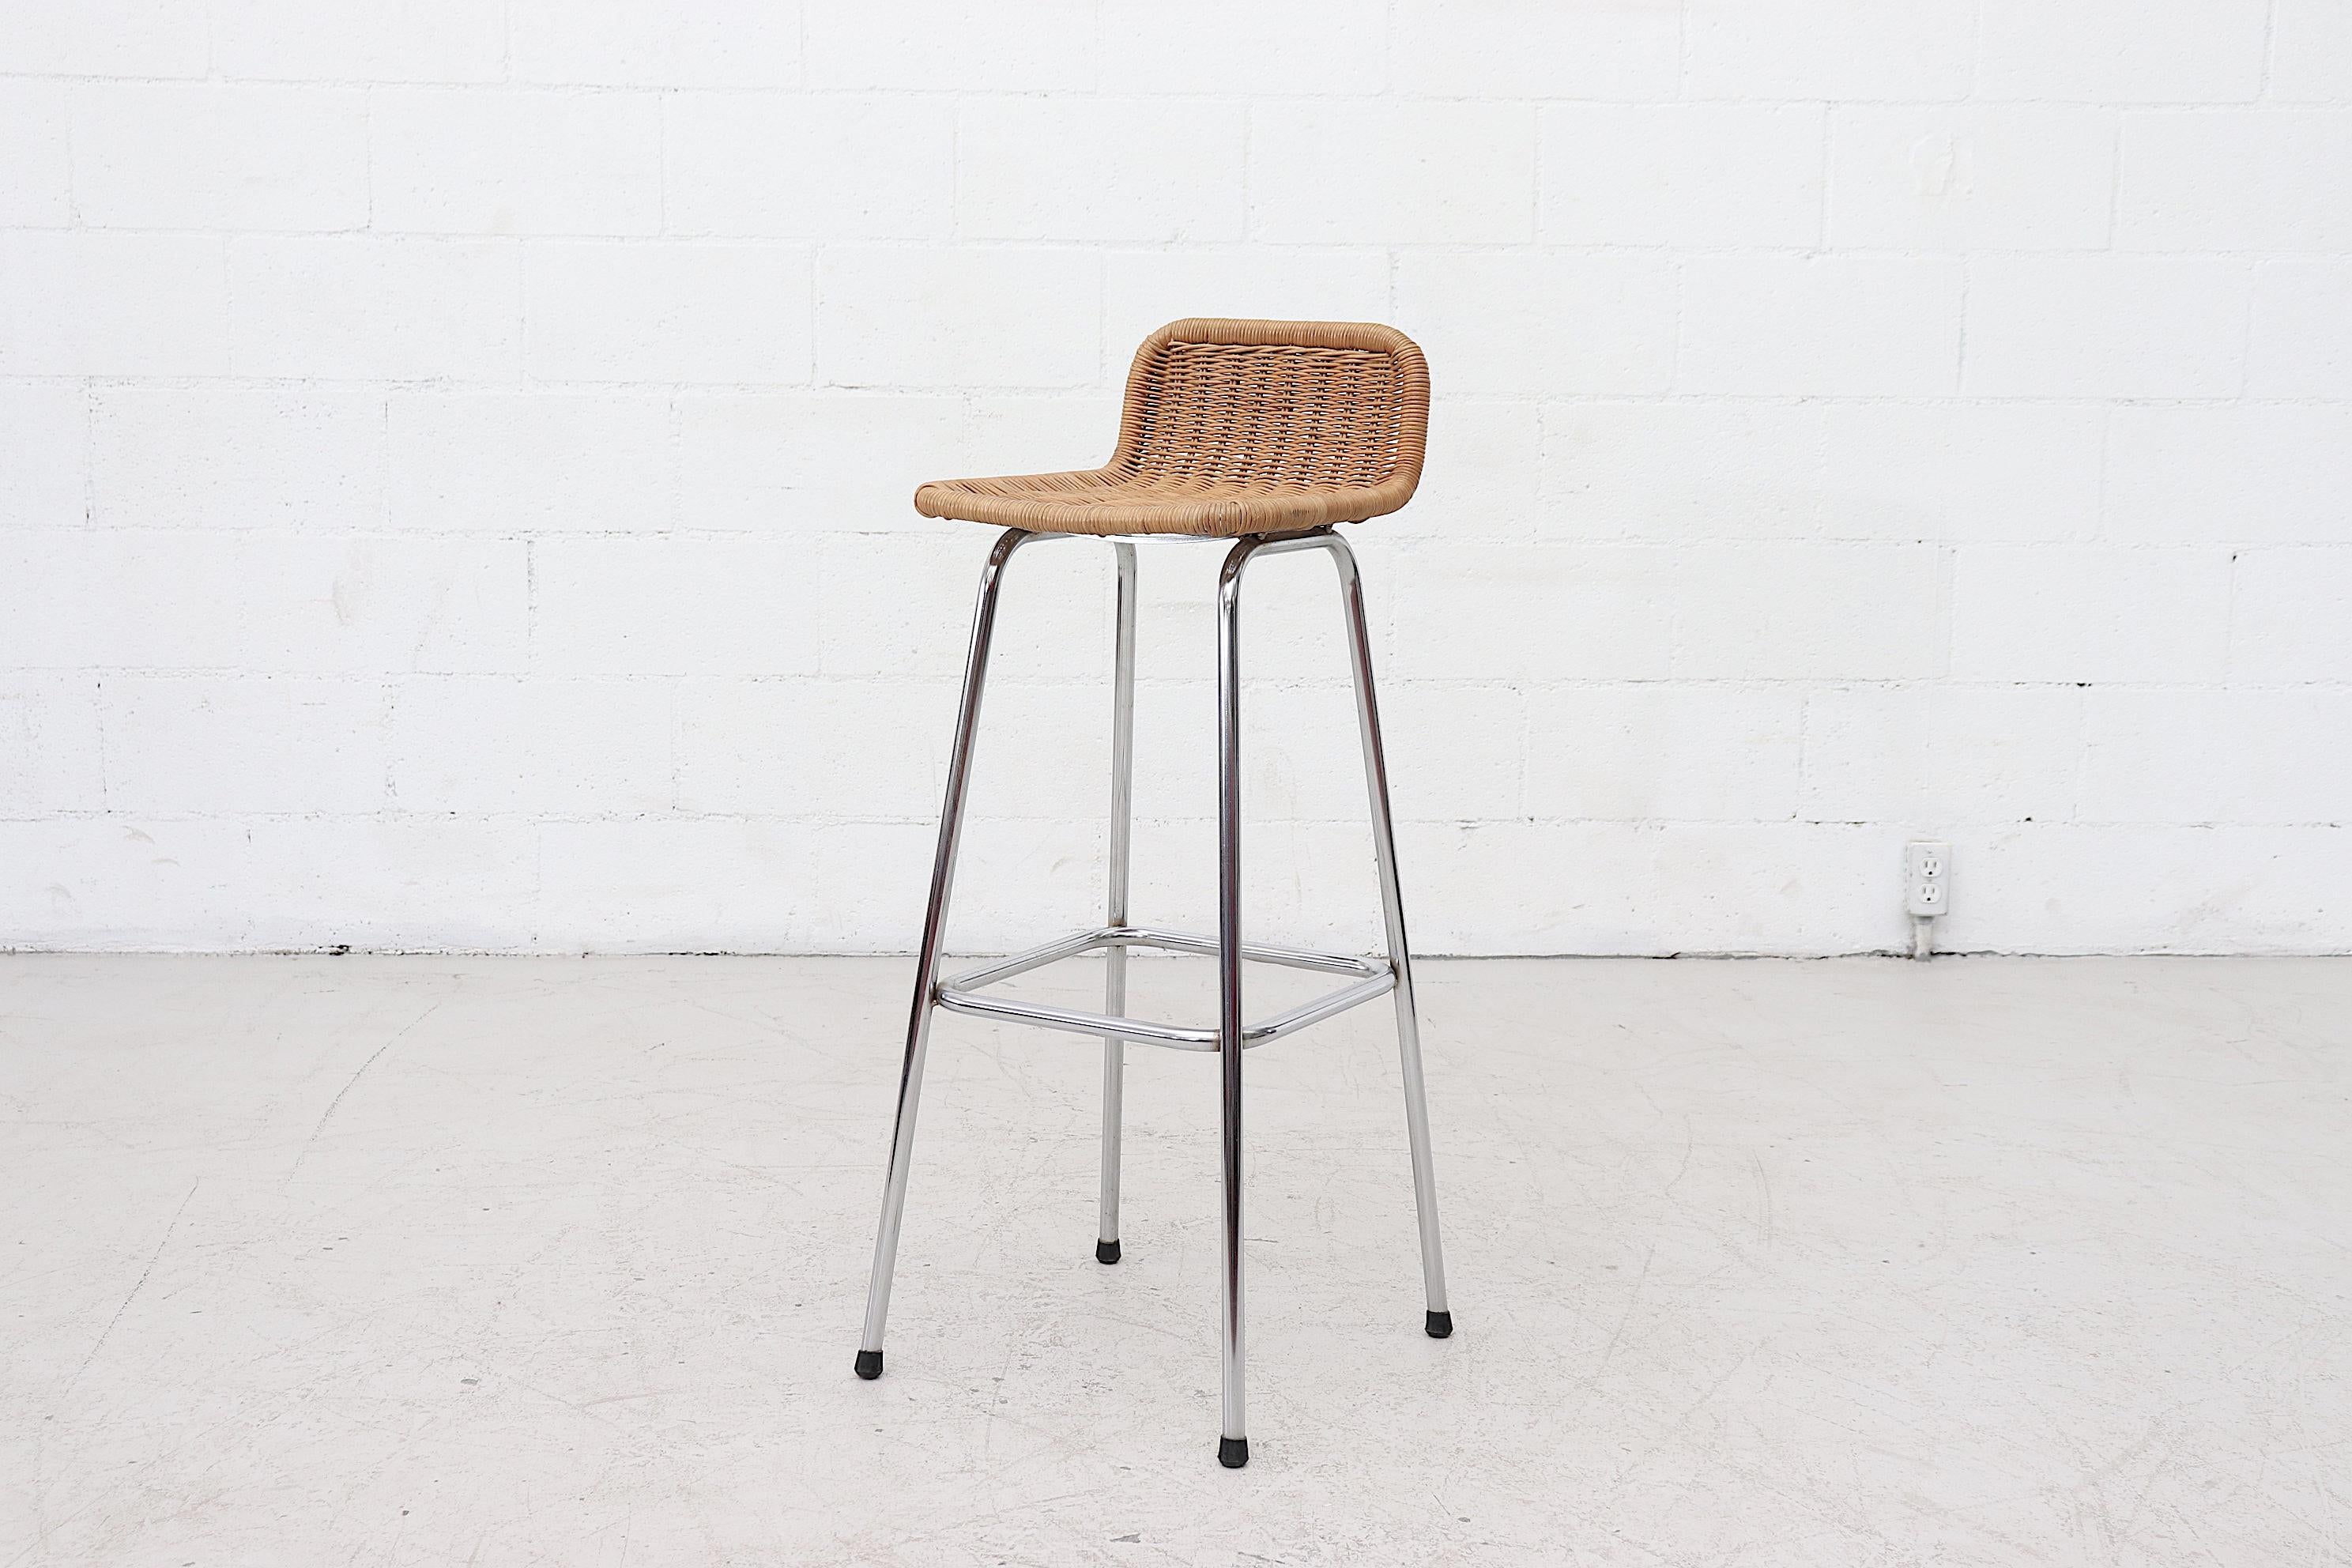 wicker style bar stools